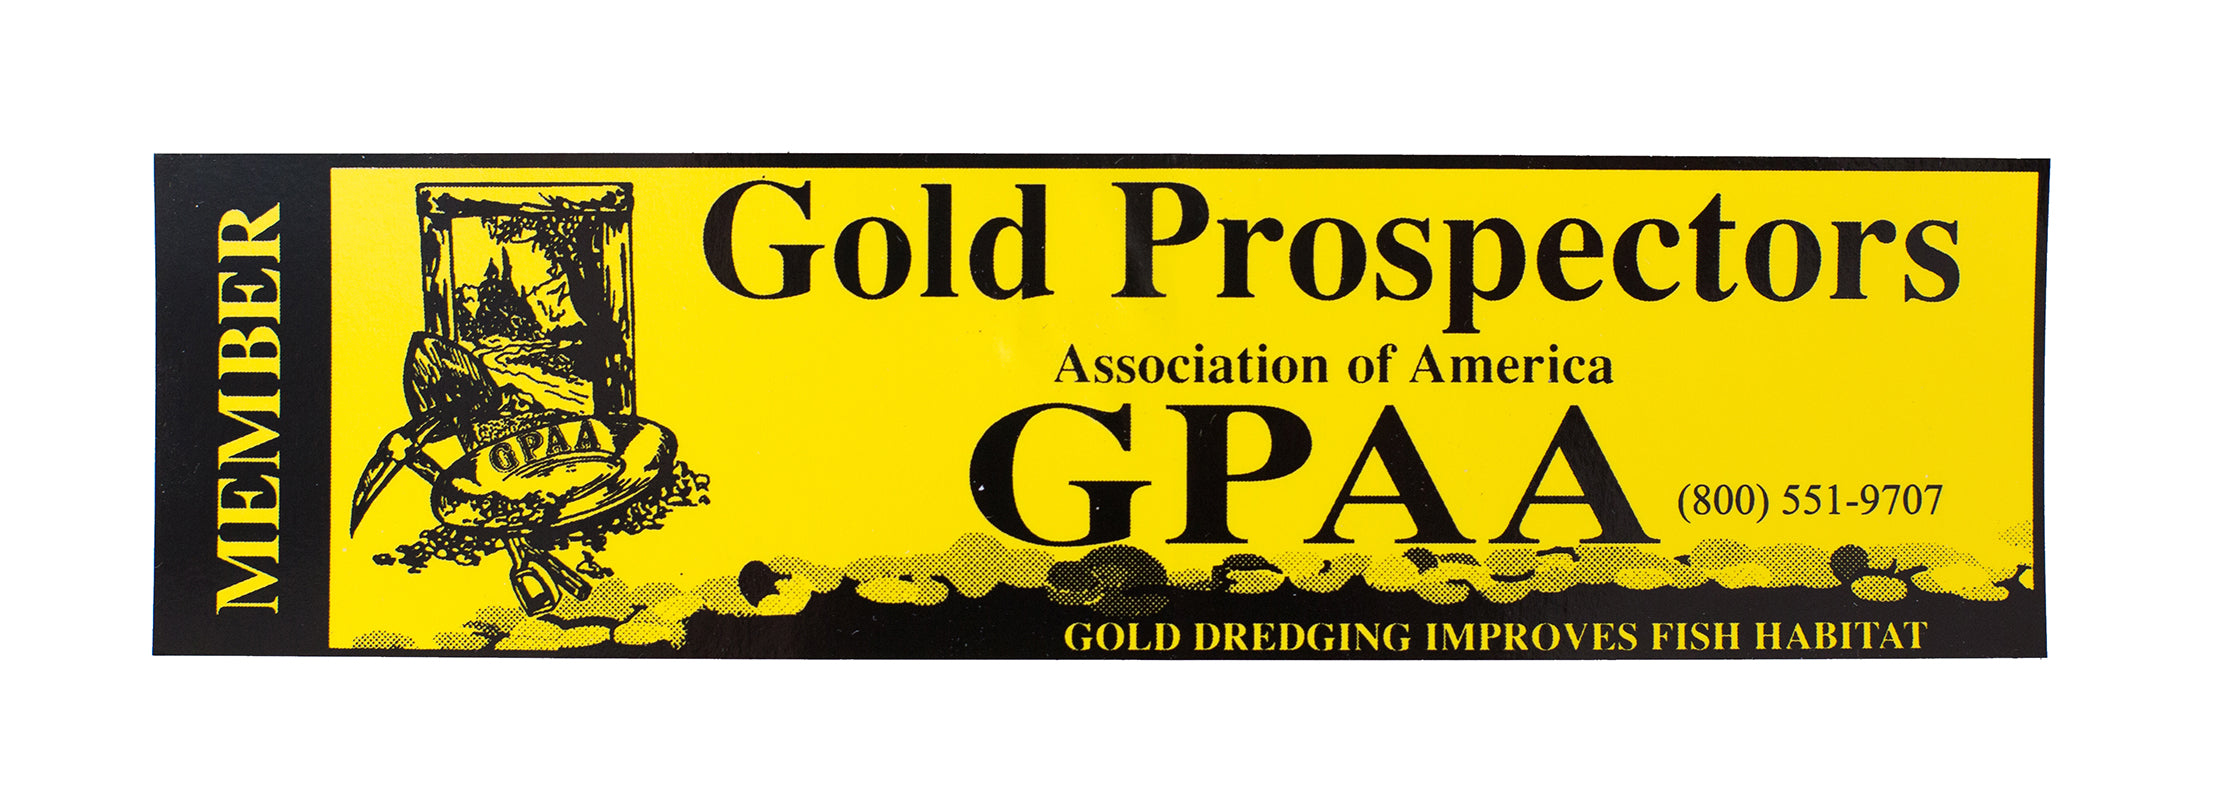 GPAA Bumper Sticker - Gold Prospectors Association of America